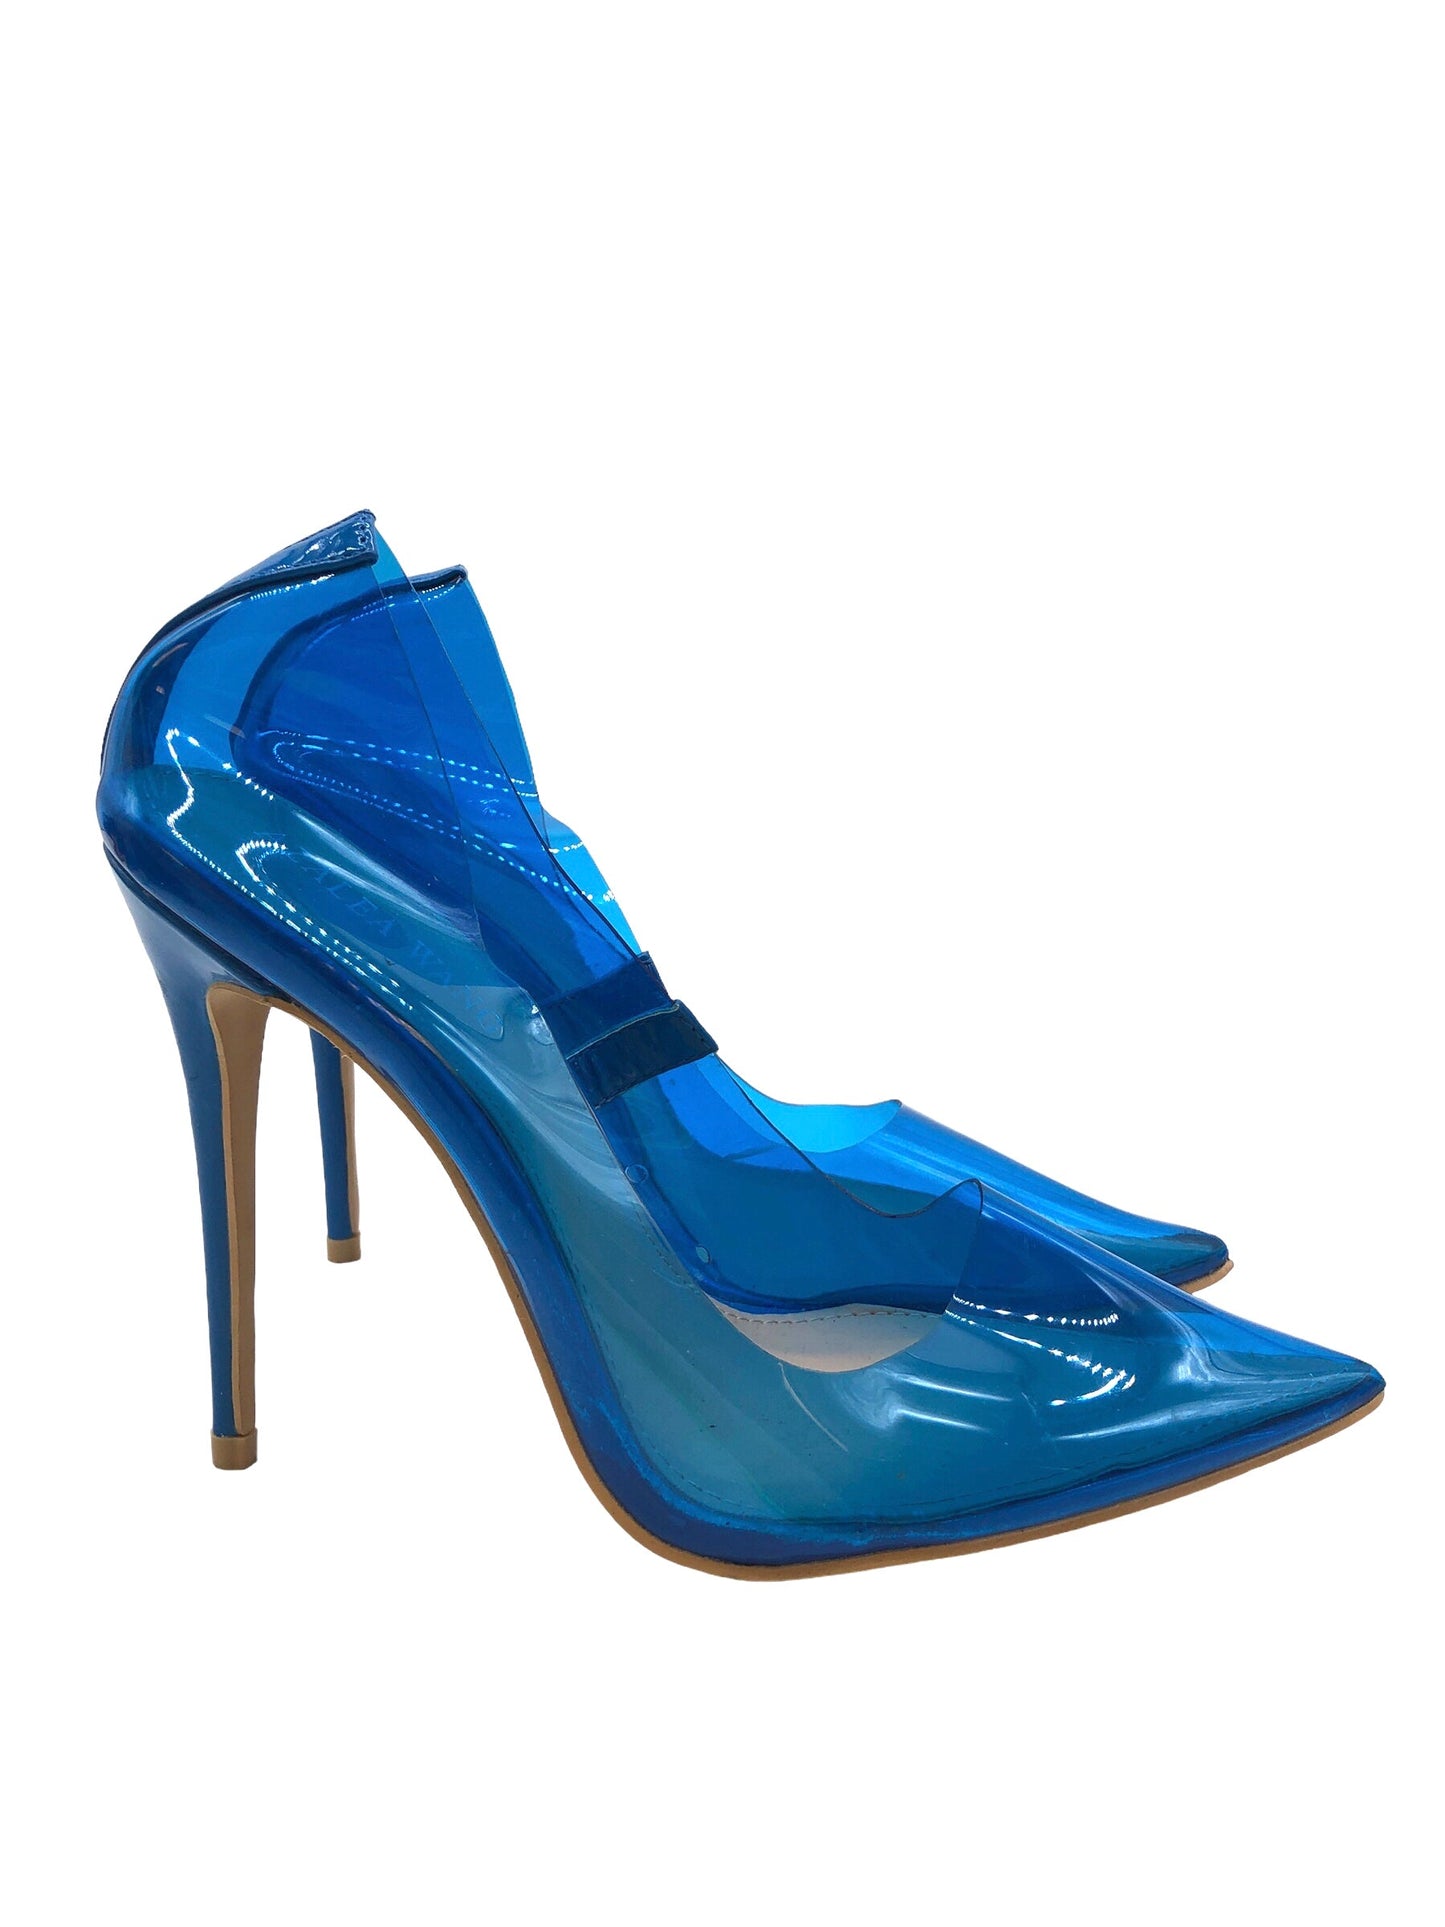 Blue Shoes Heels Stiletto Clothes Mentor, Size 6.5